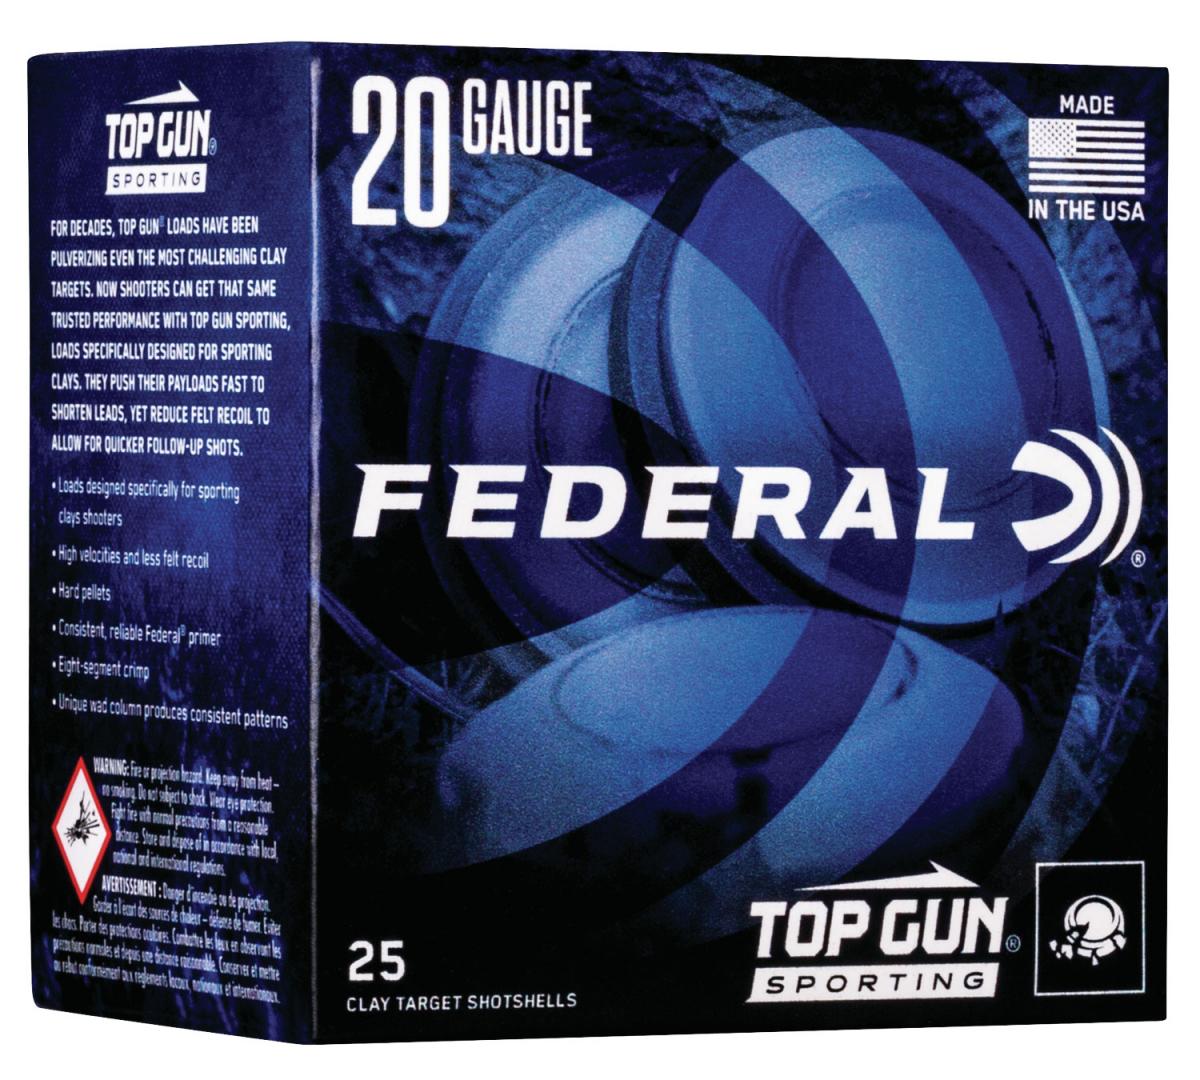 Federal Premium Top Gun 28 Gauge Shotshells, 3/4 Oz - Lead And Trky Shot Shells at Academy Sports